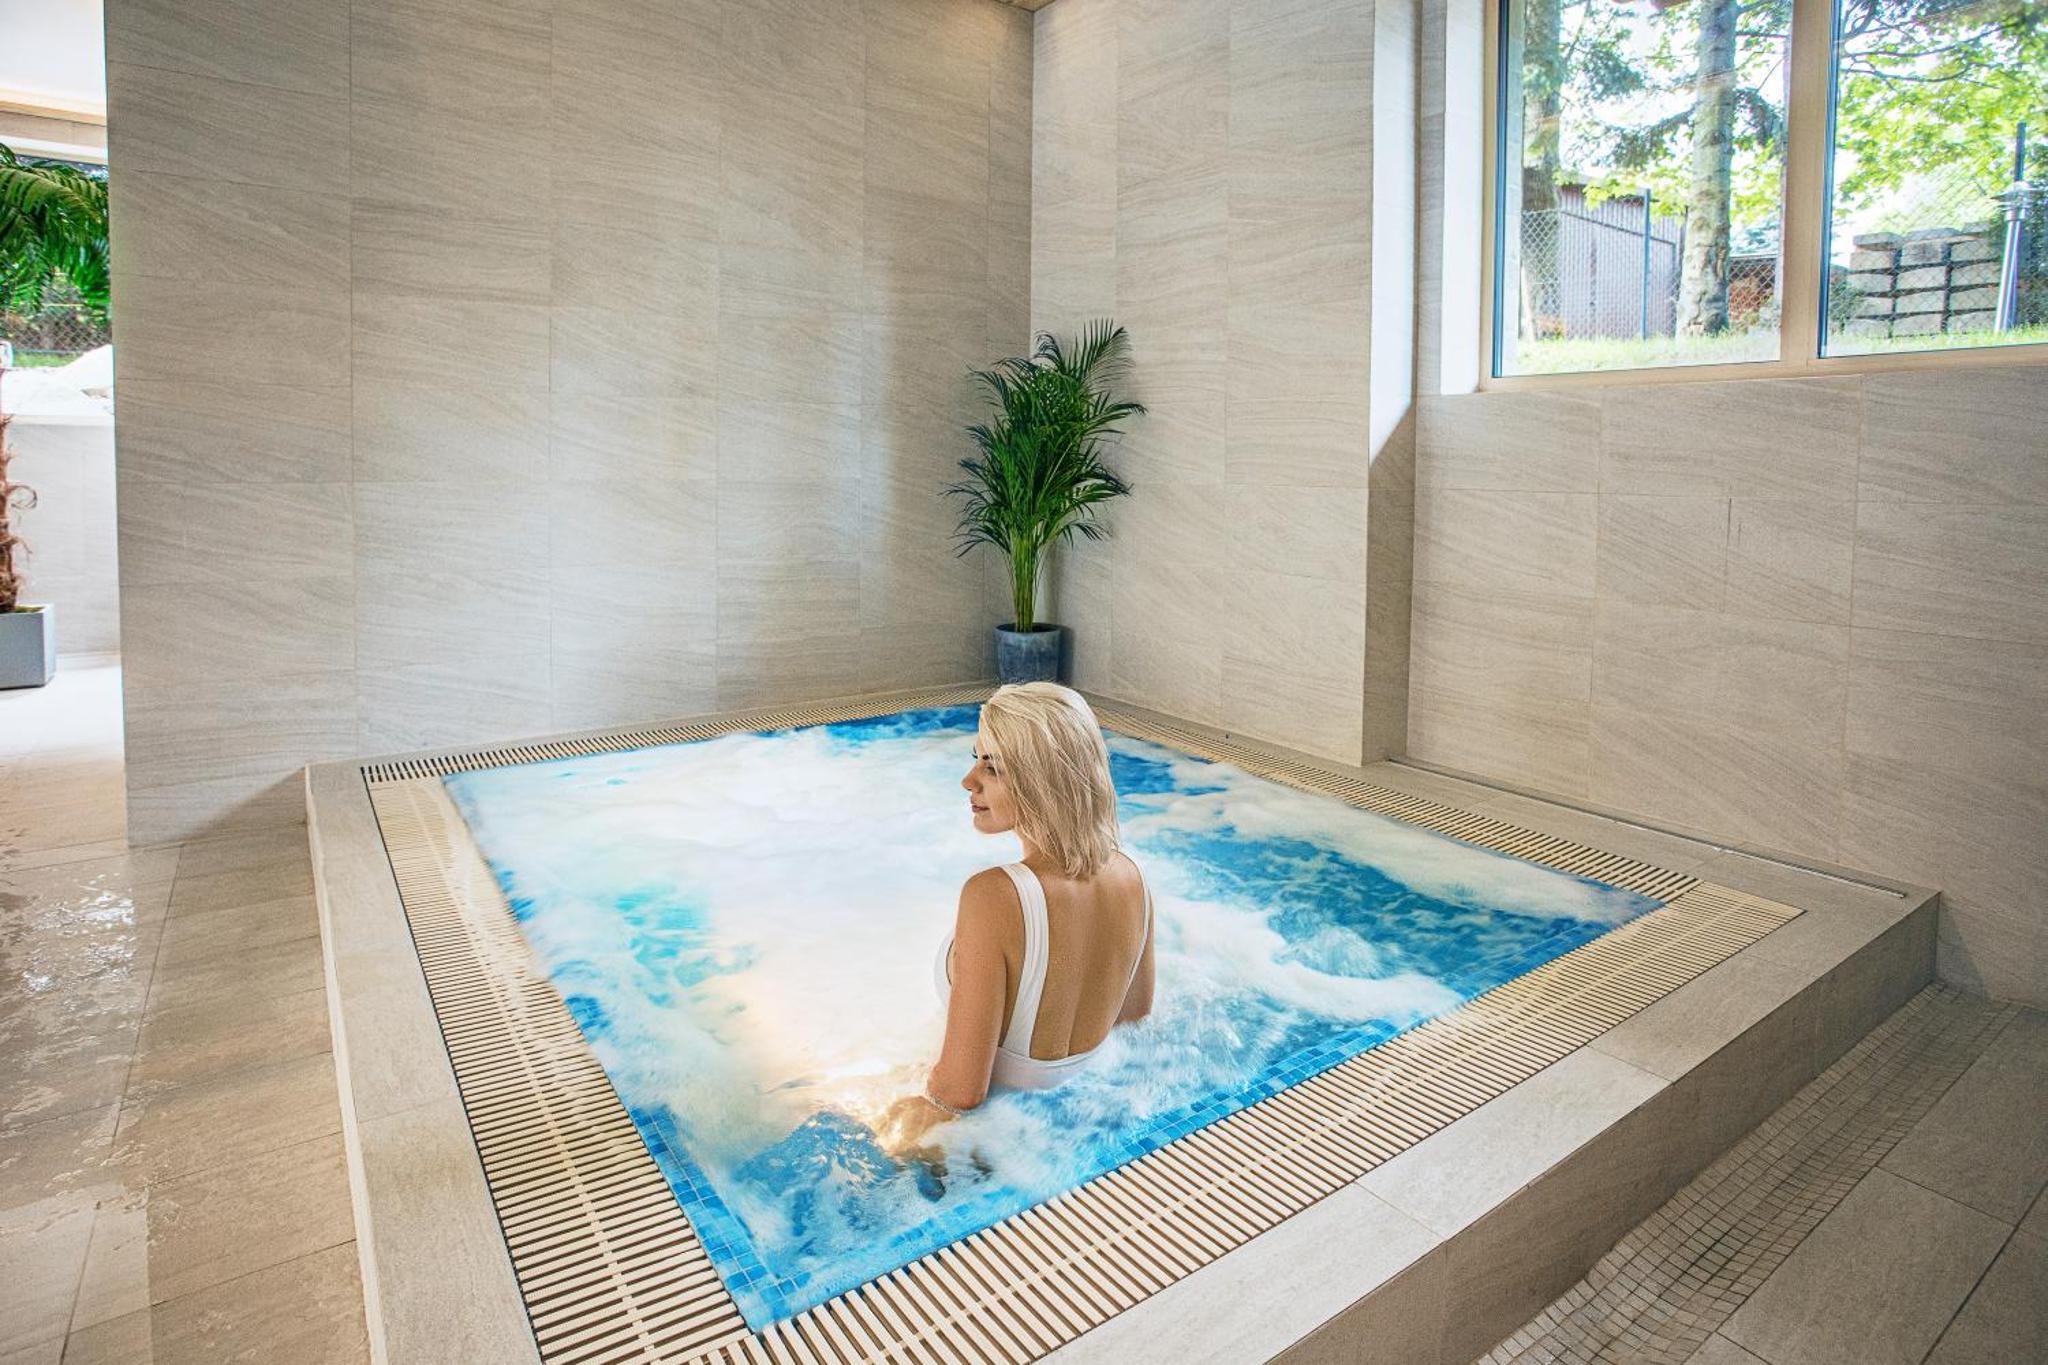 Villa Cannes Resort Zakopane - grota solna, sauna fińska